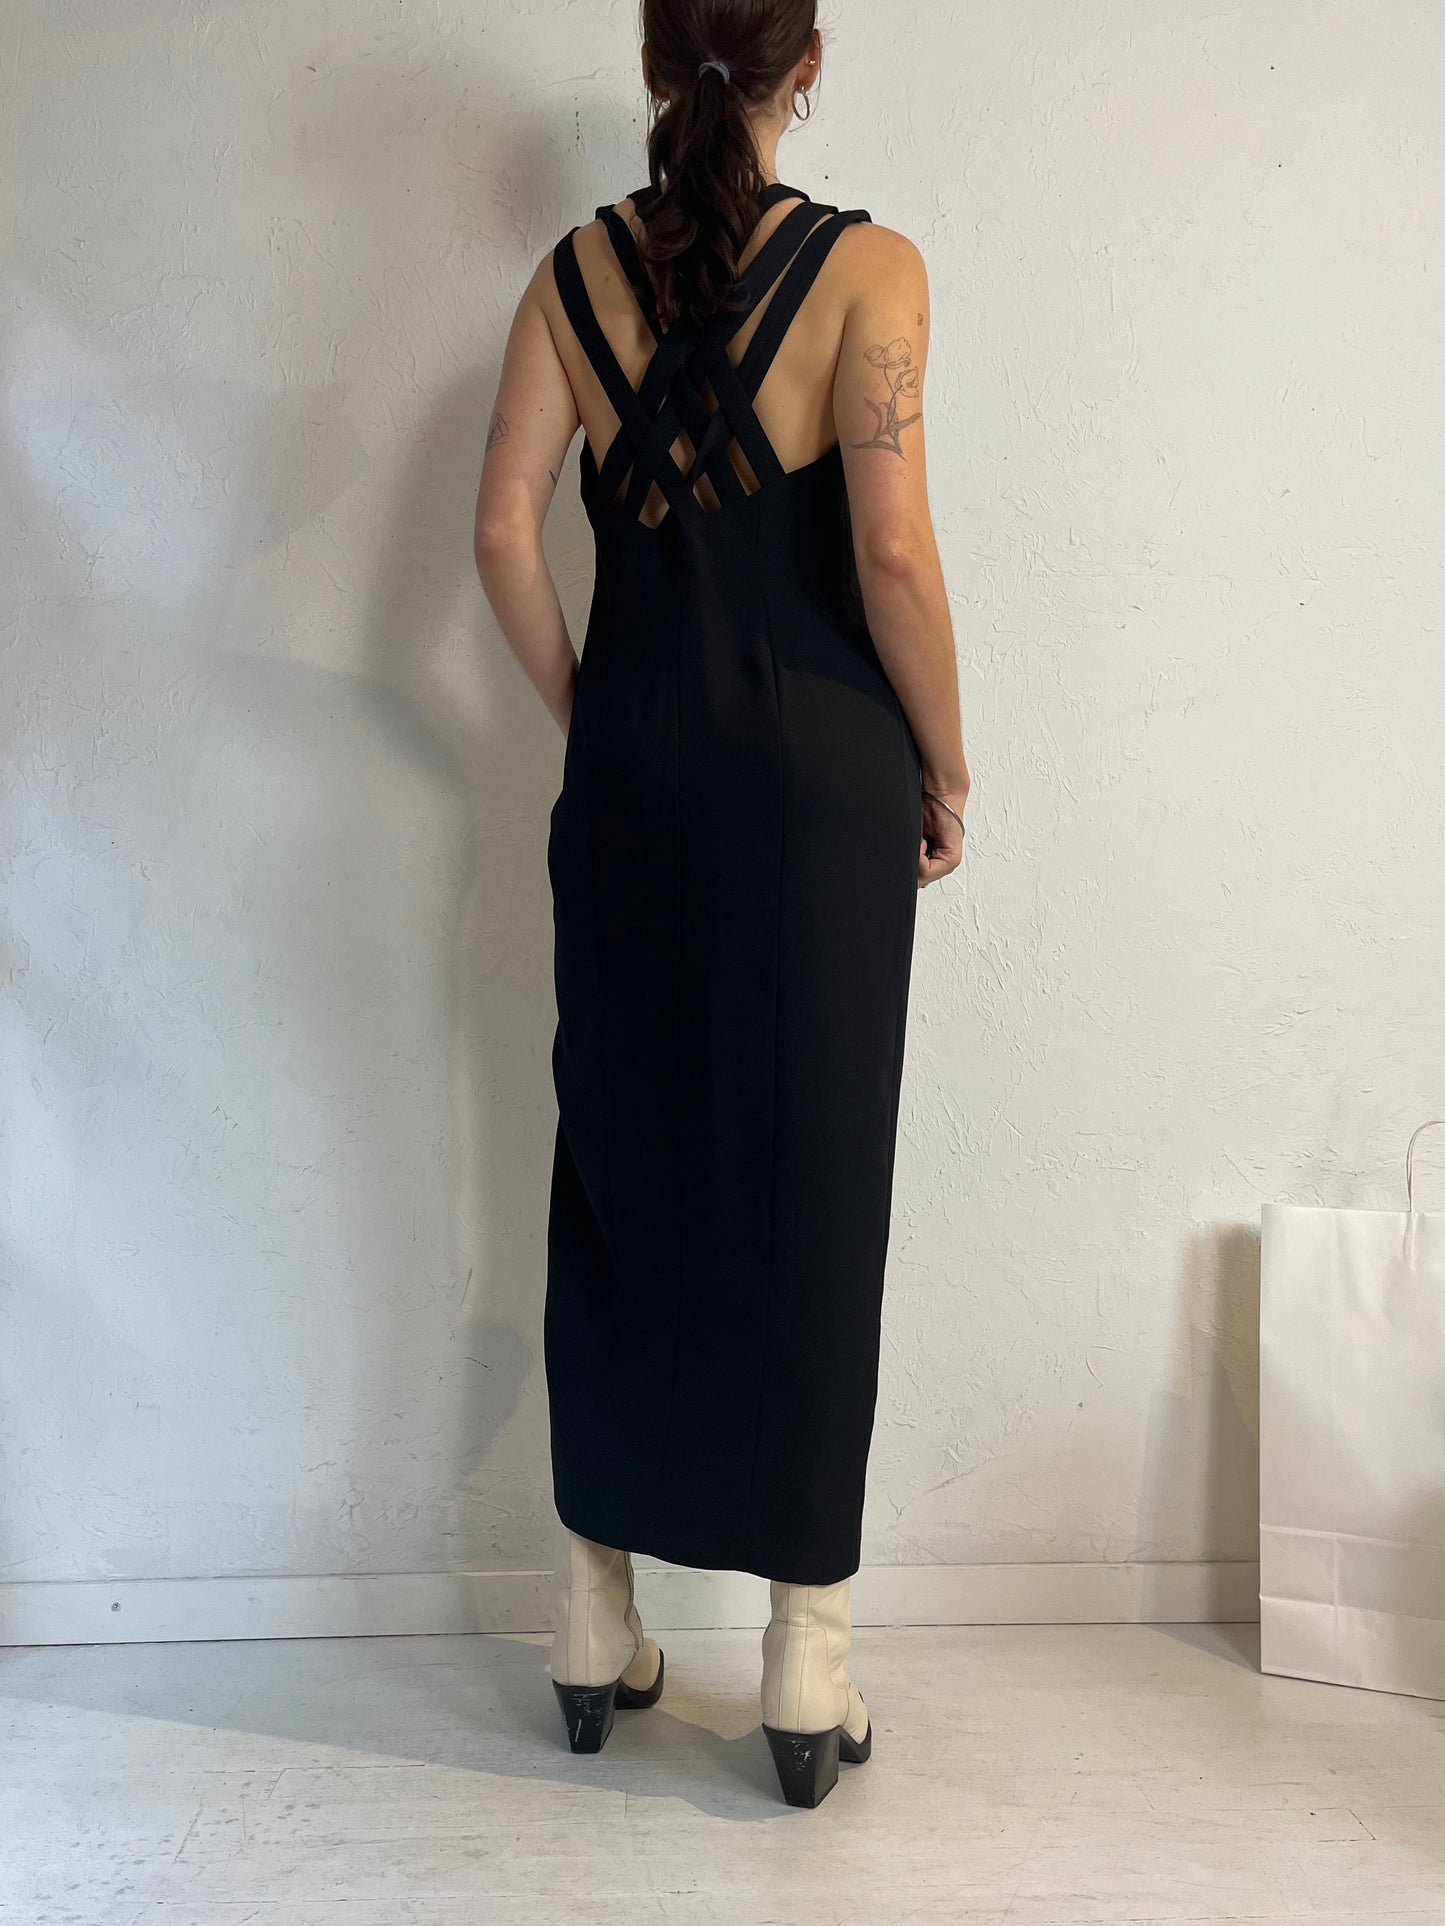 Y2k 'Liz Claiborne' Black Cross Back Beaded Formal Dress / Medium